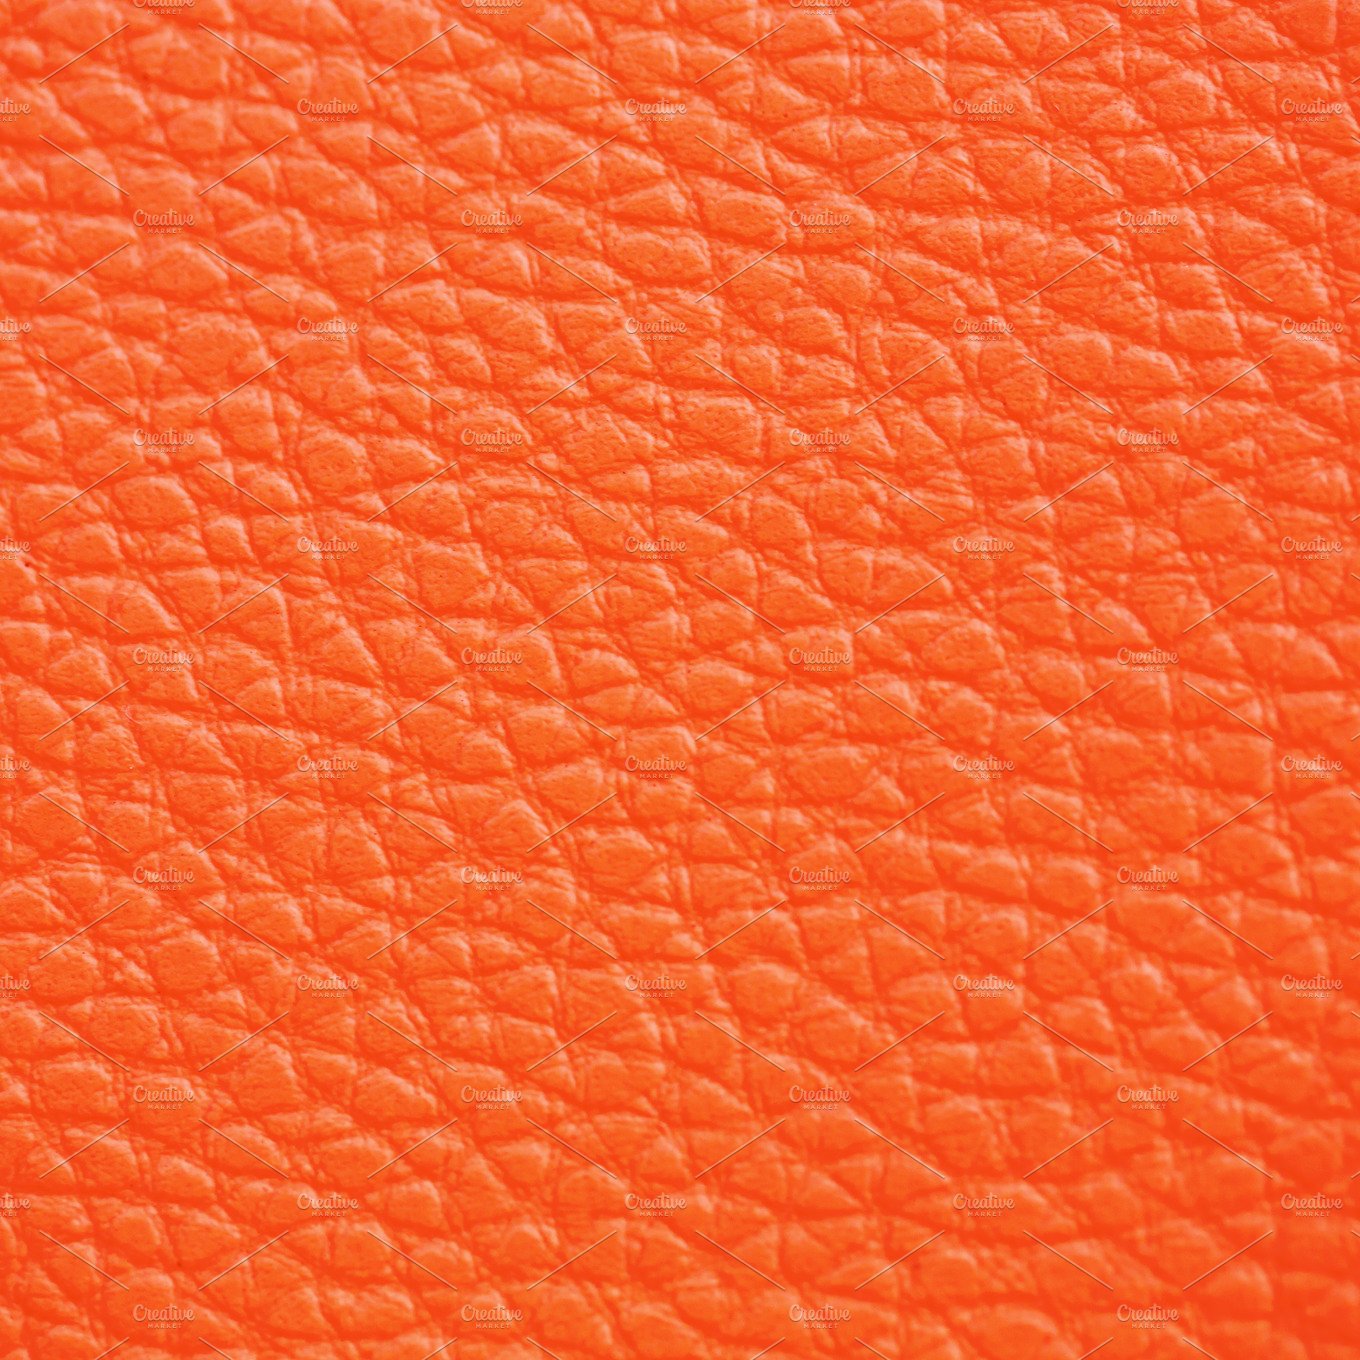 Orange Leather cover image.